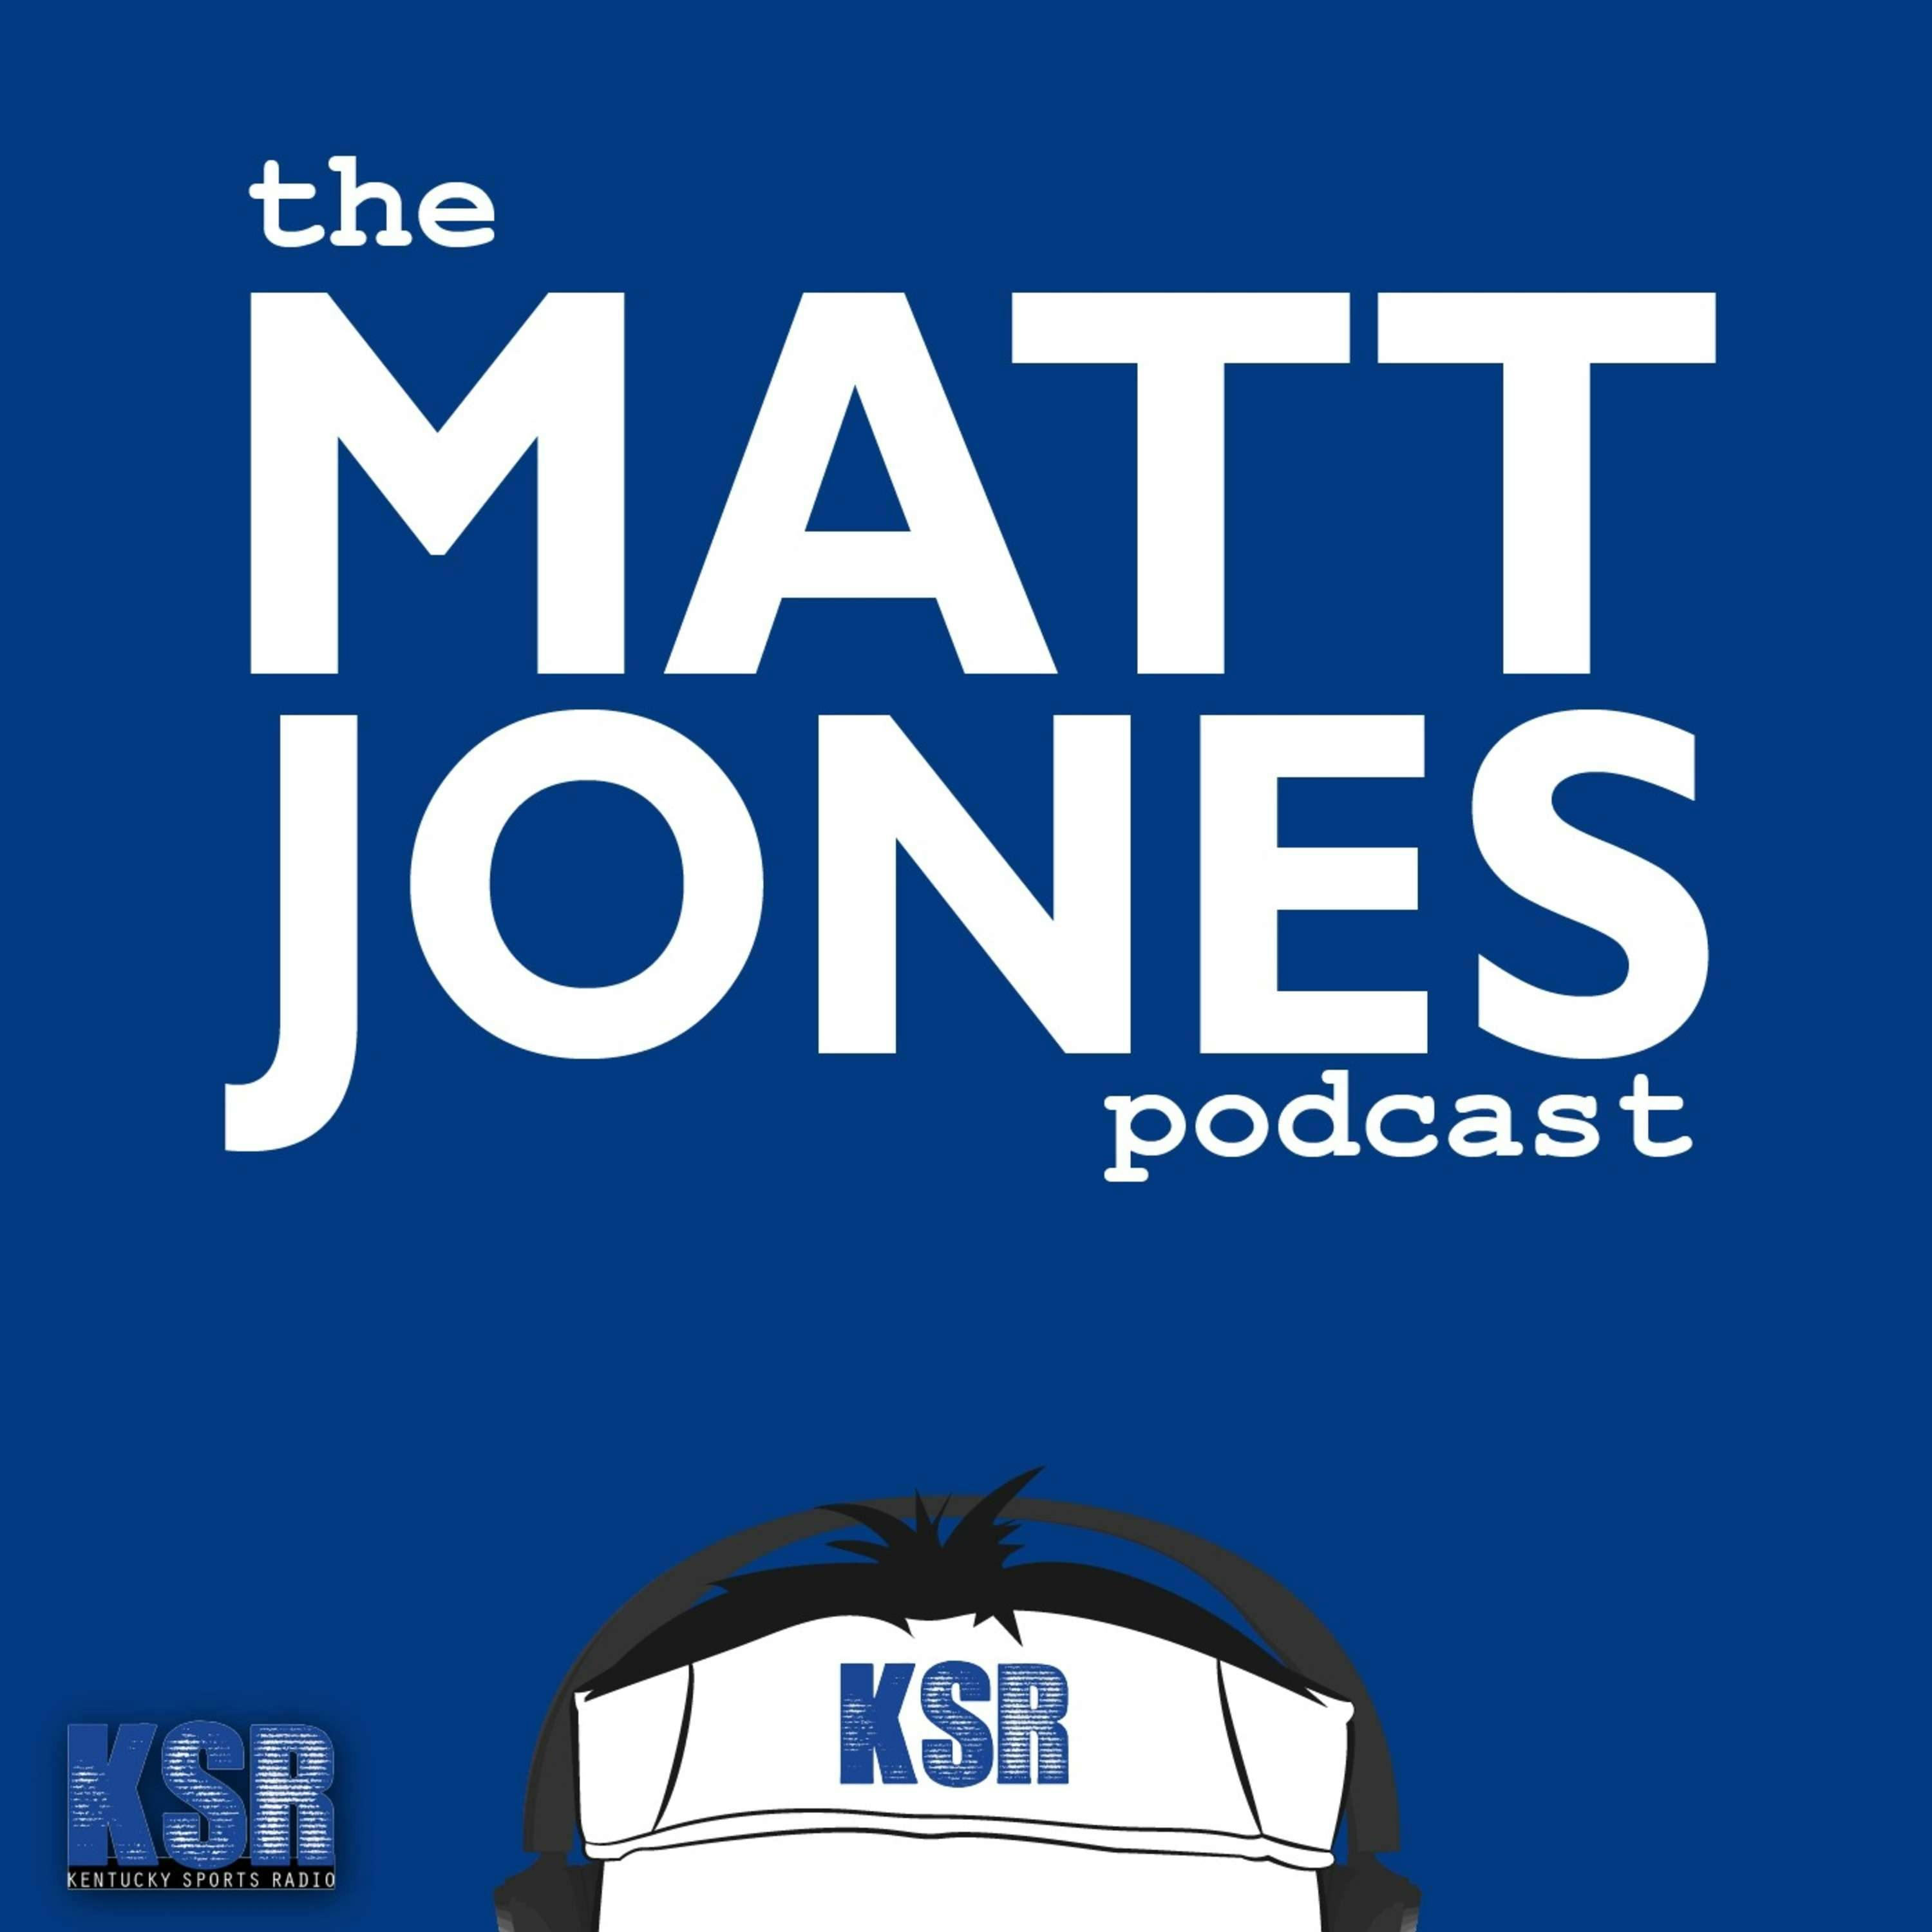 The Matt Jones Podcast E50: SEC Integration with Nate Northington & Wilbur Hackett